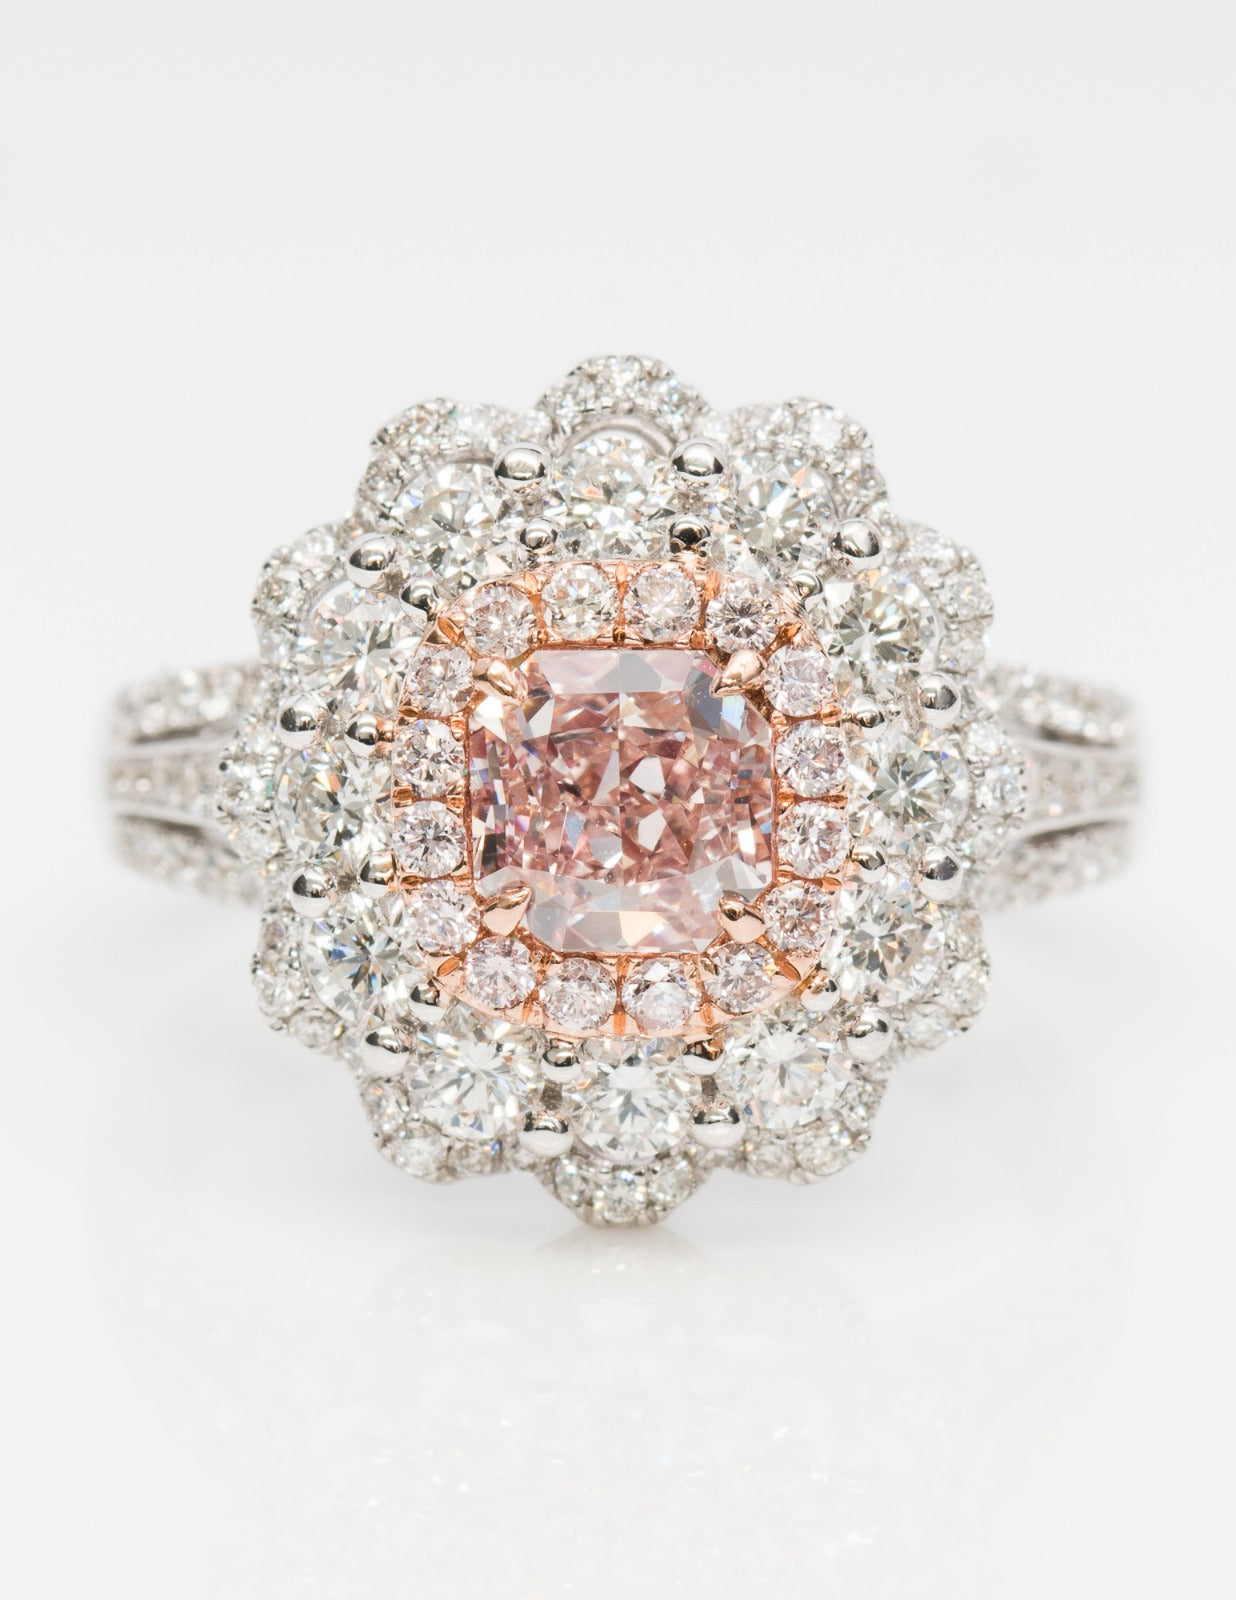 jewellry with pink diamonds